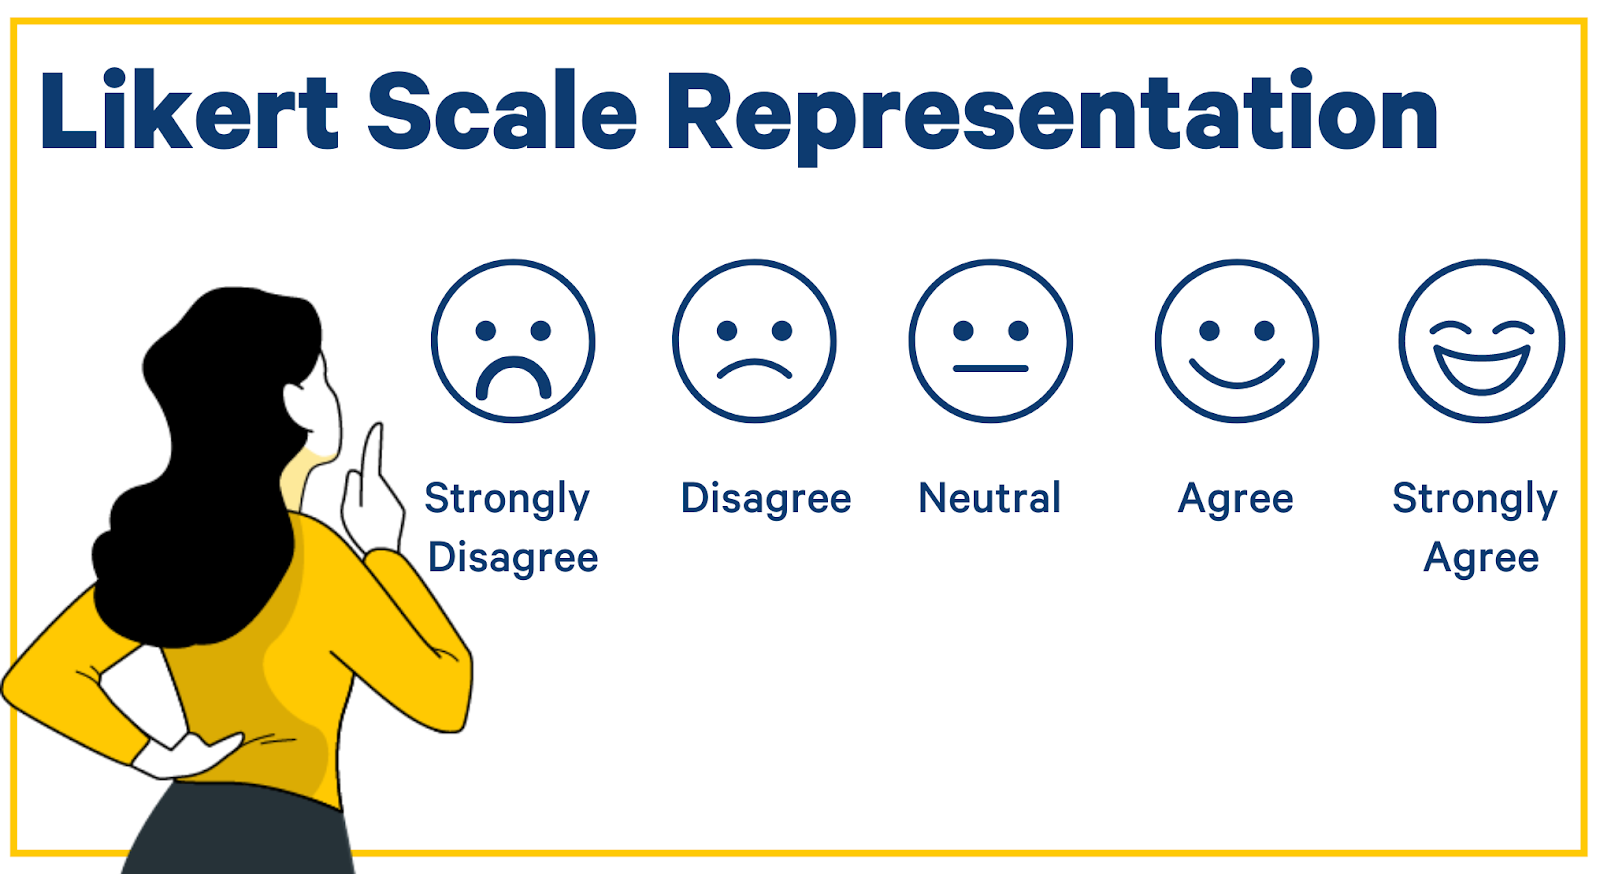 likert scale representation